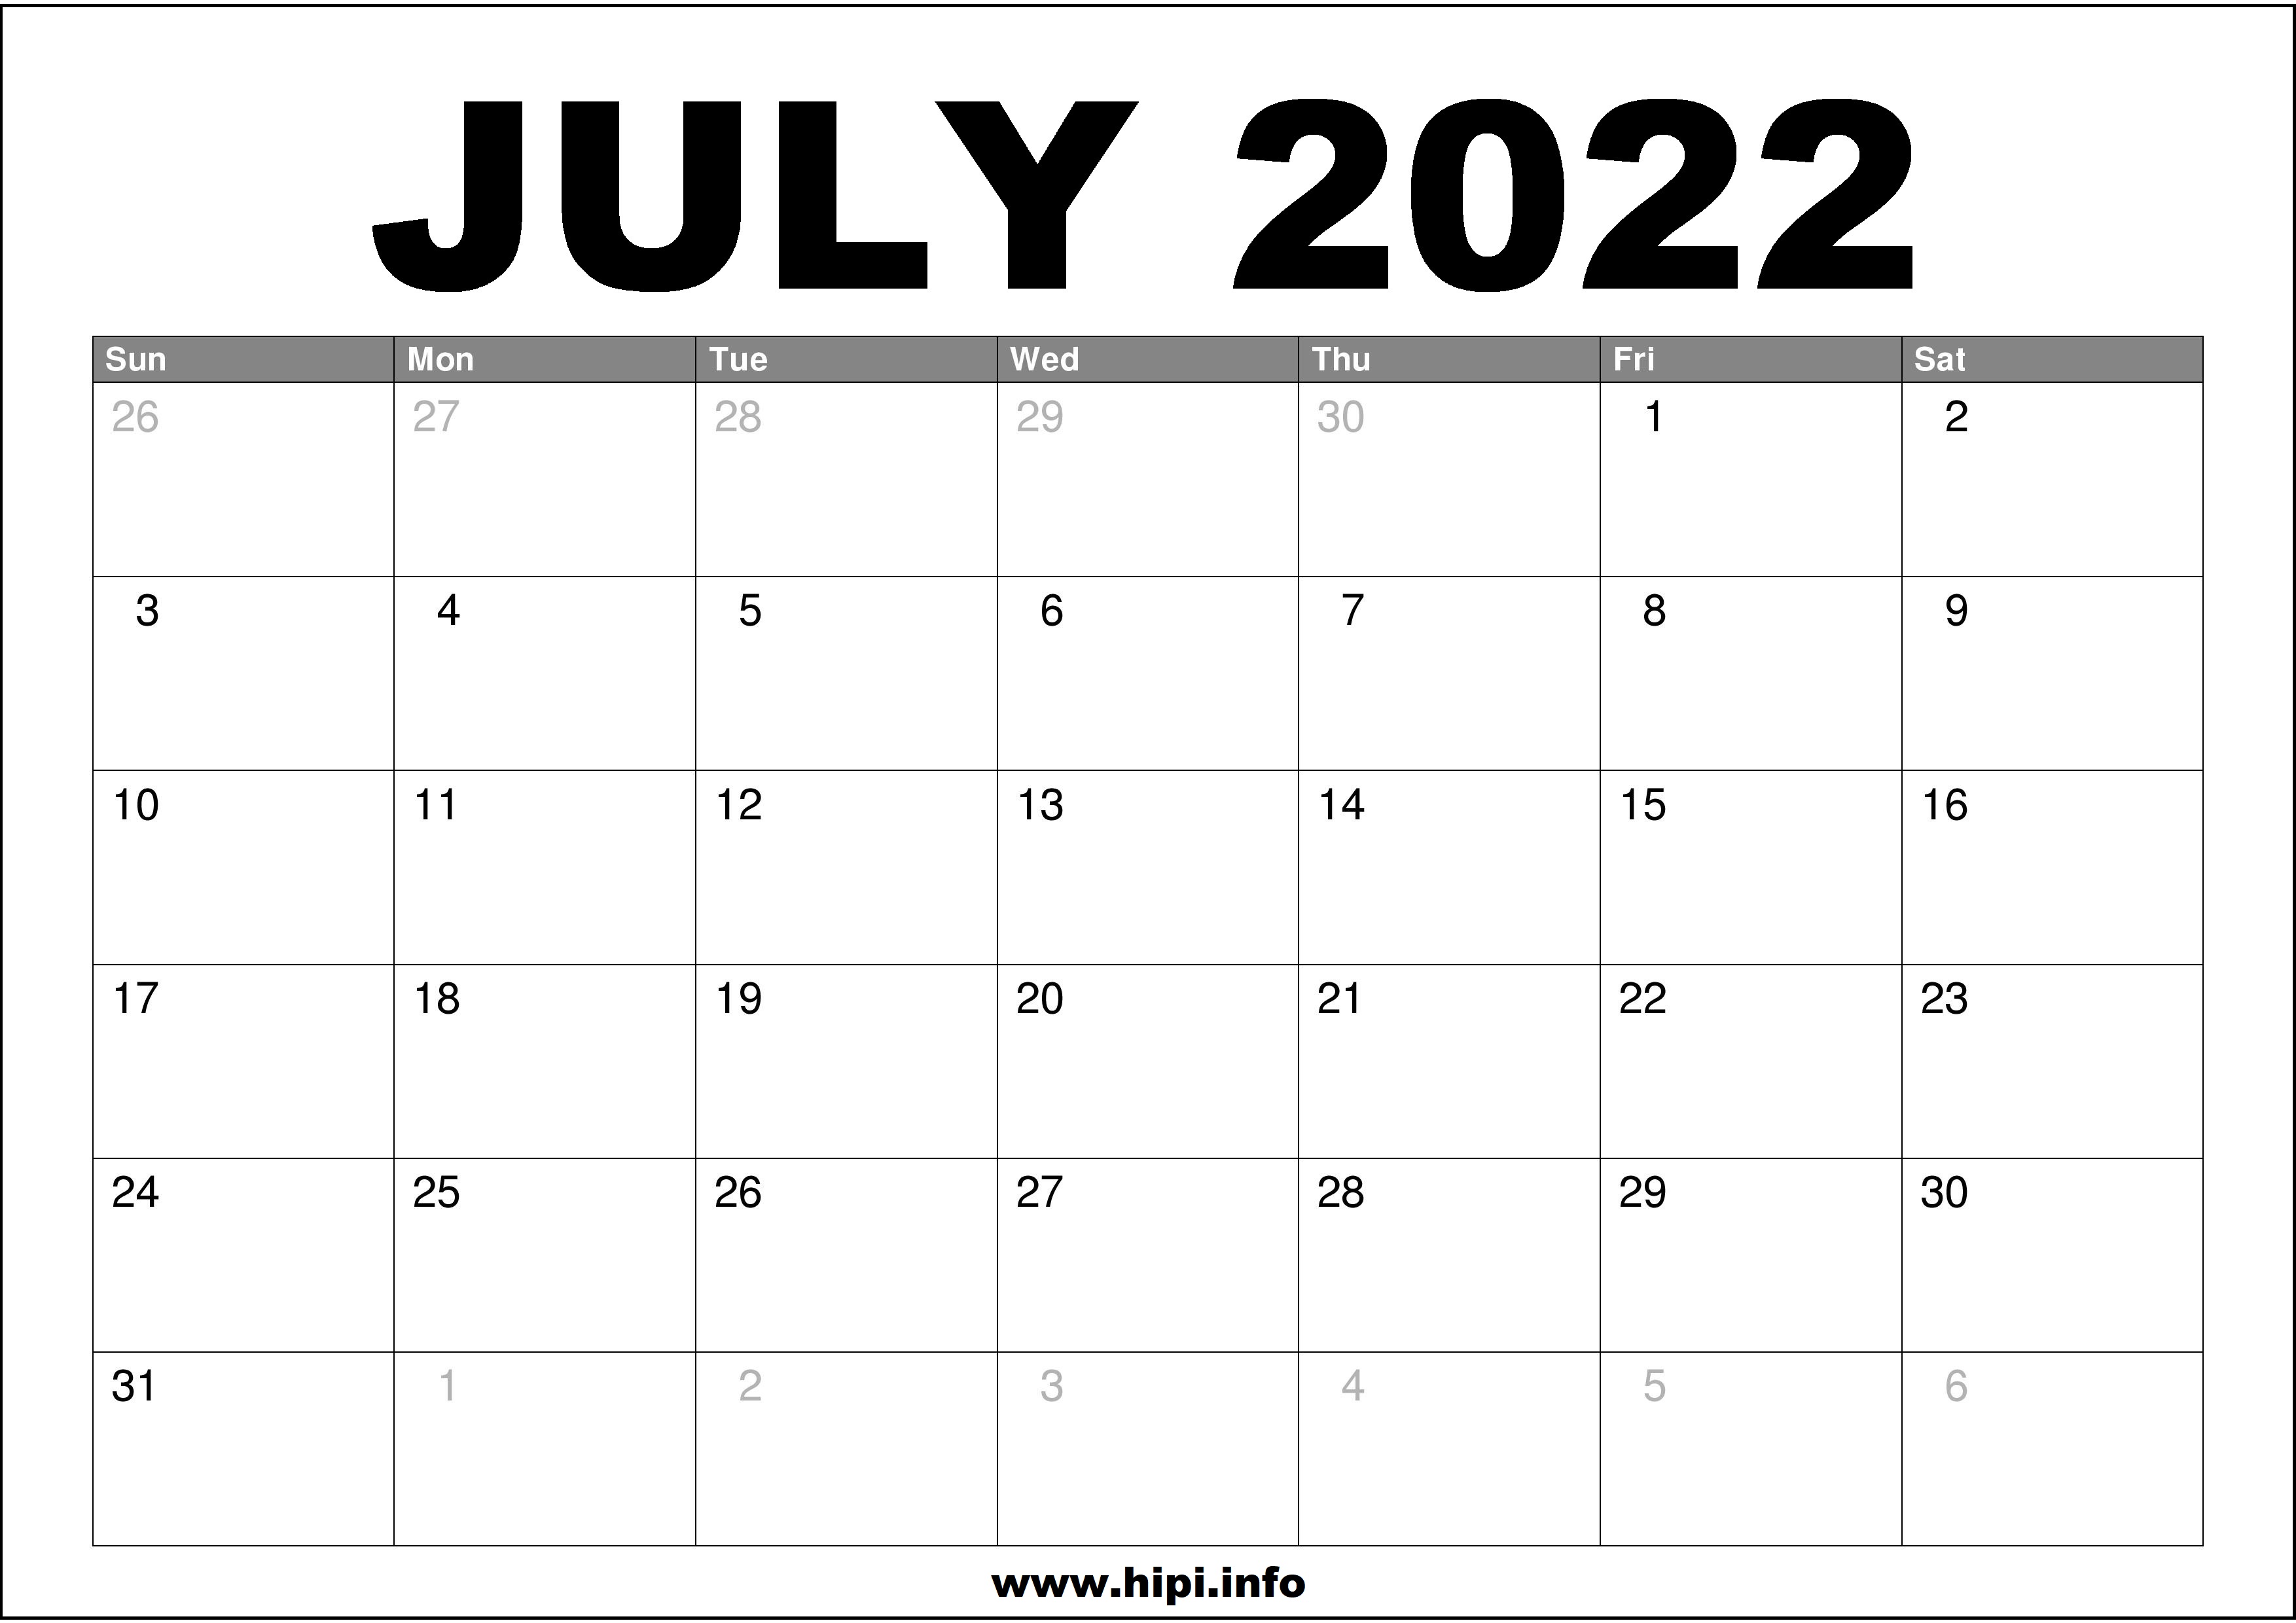 June And July Calendar 2022 Printable July 2022 Calendar Printable Free - Hipi.info | Calendars Printable Free